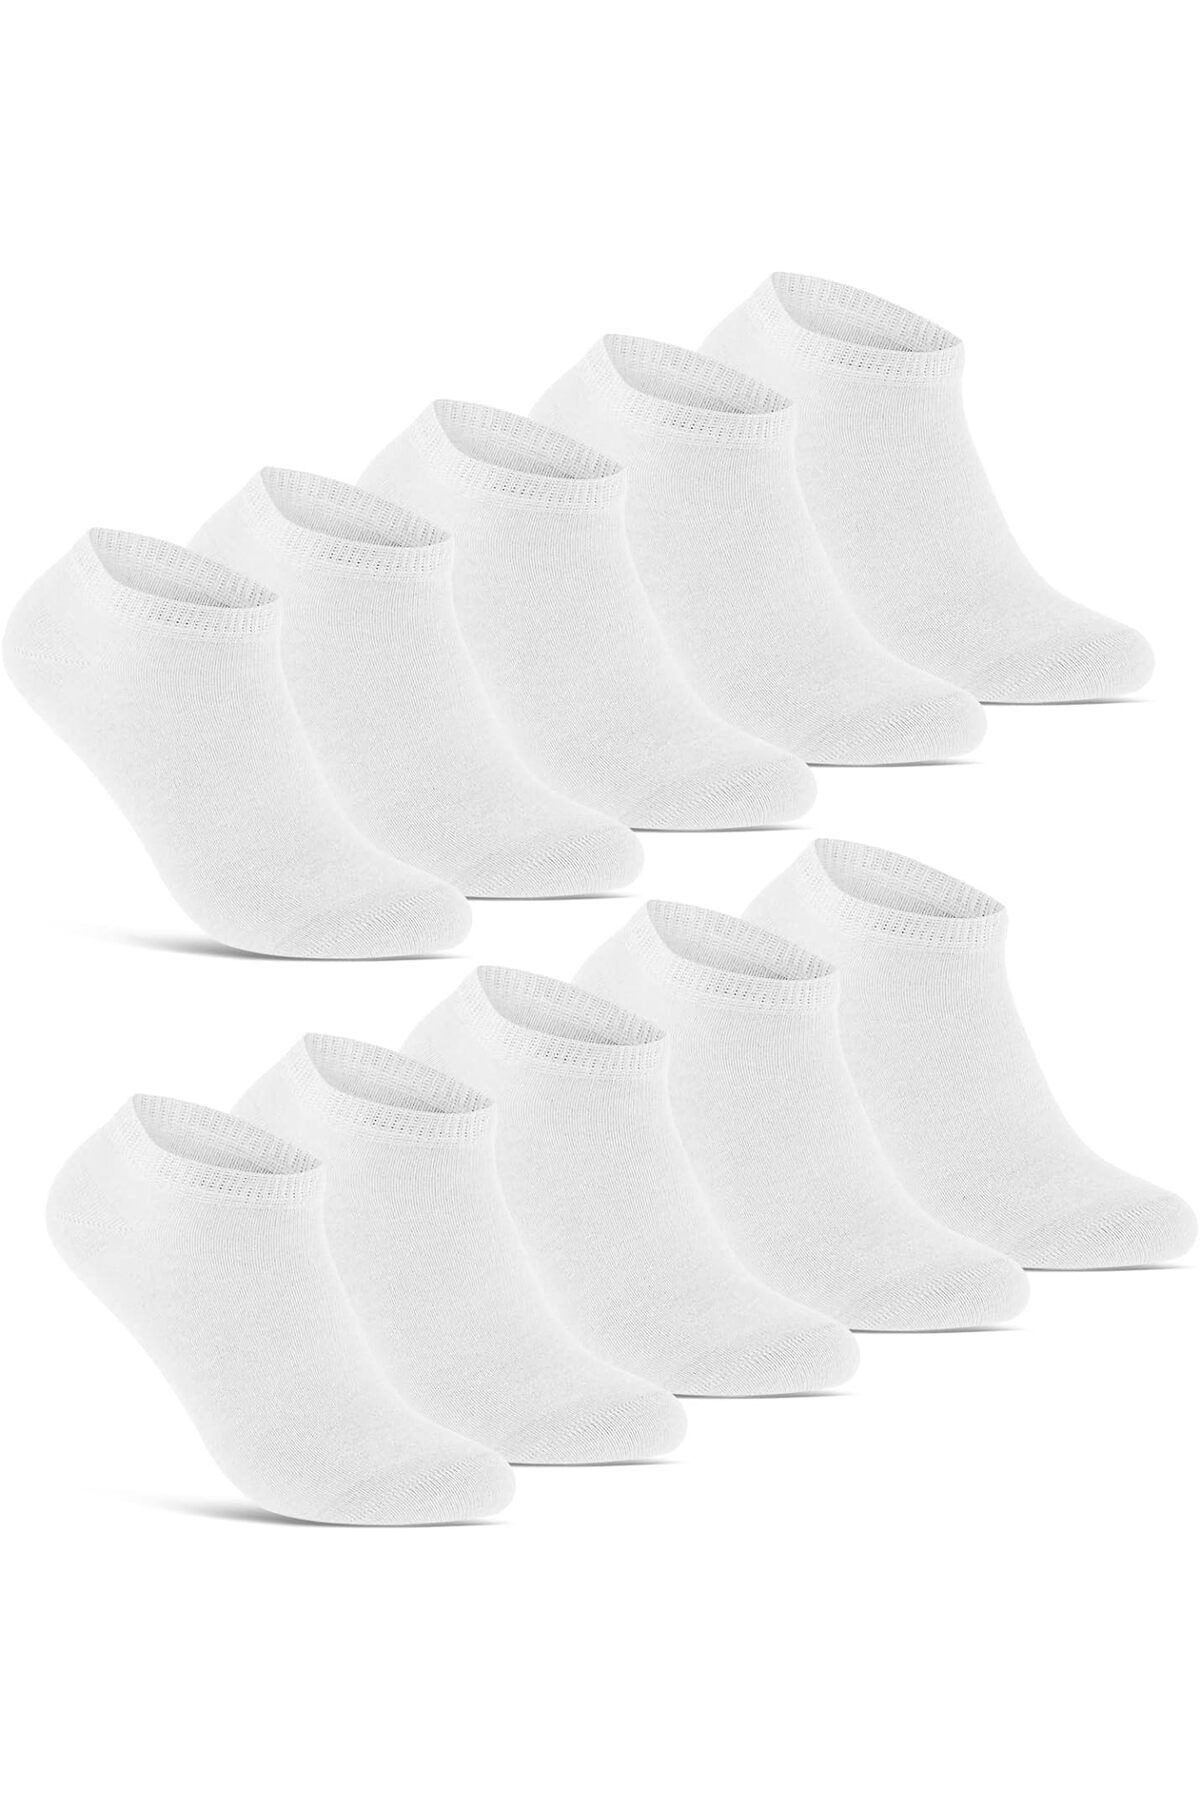 SOCKSHION Pamuklu Patik Bilek Boy Çorap Patik Çorap Beyaz Renk 10 Çift